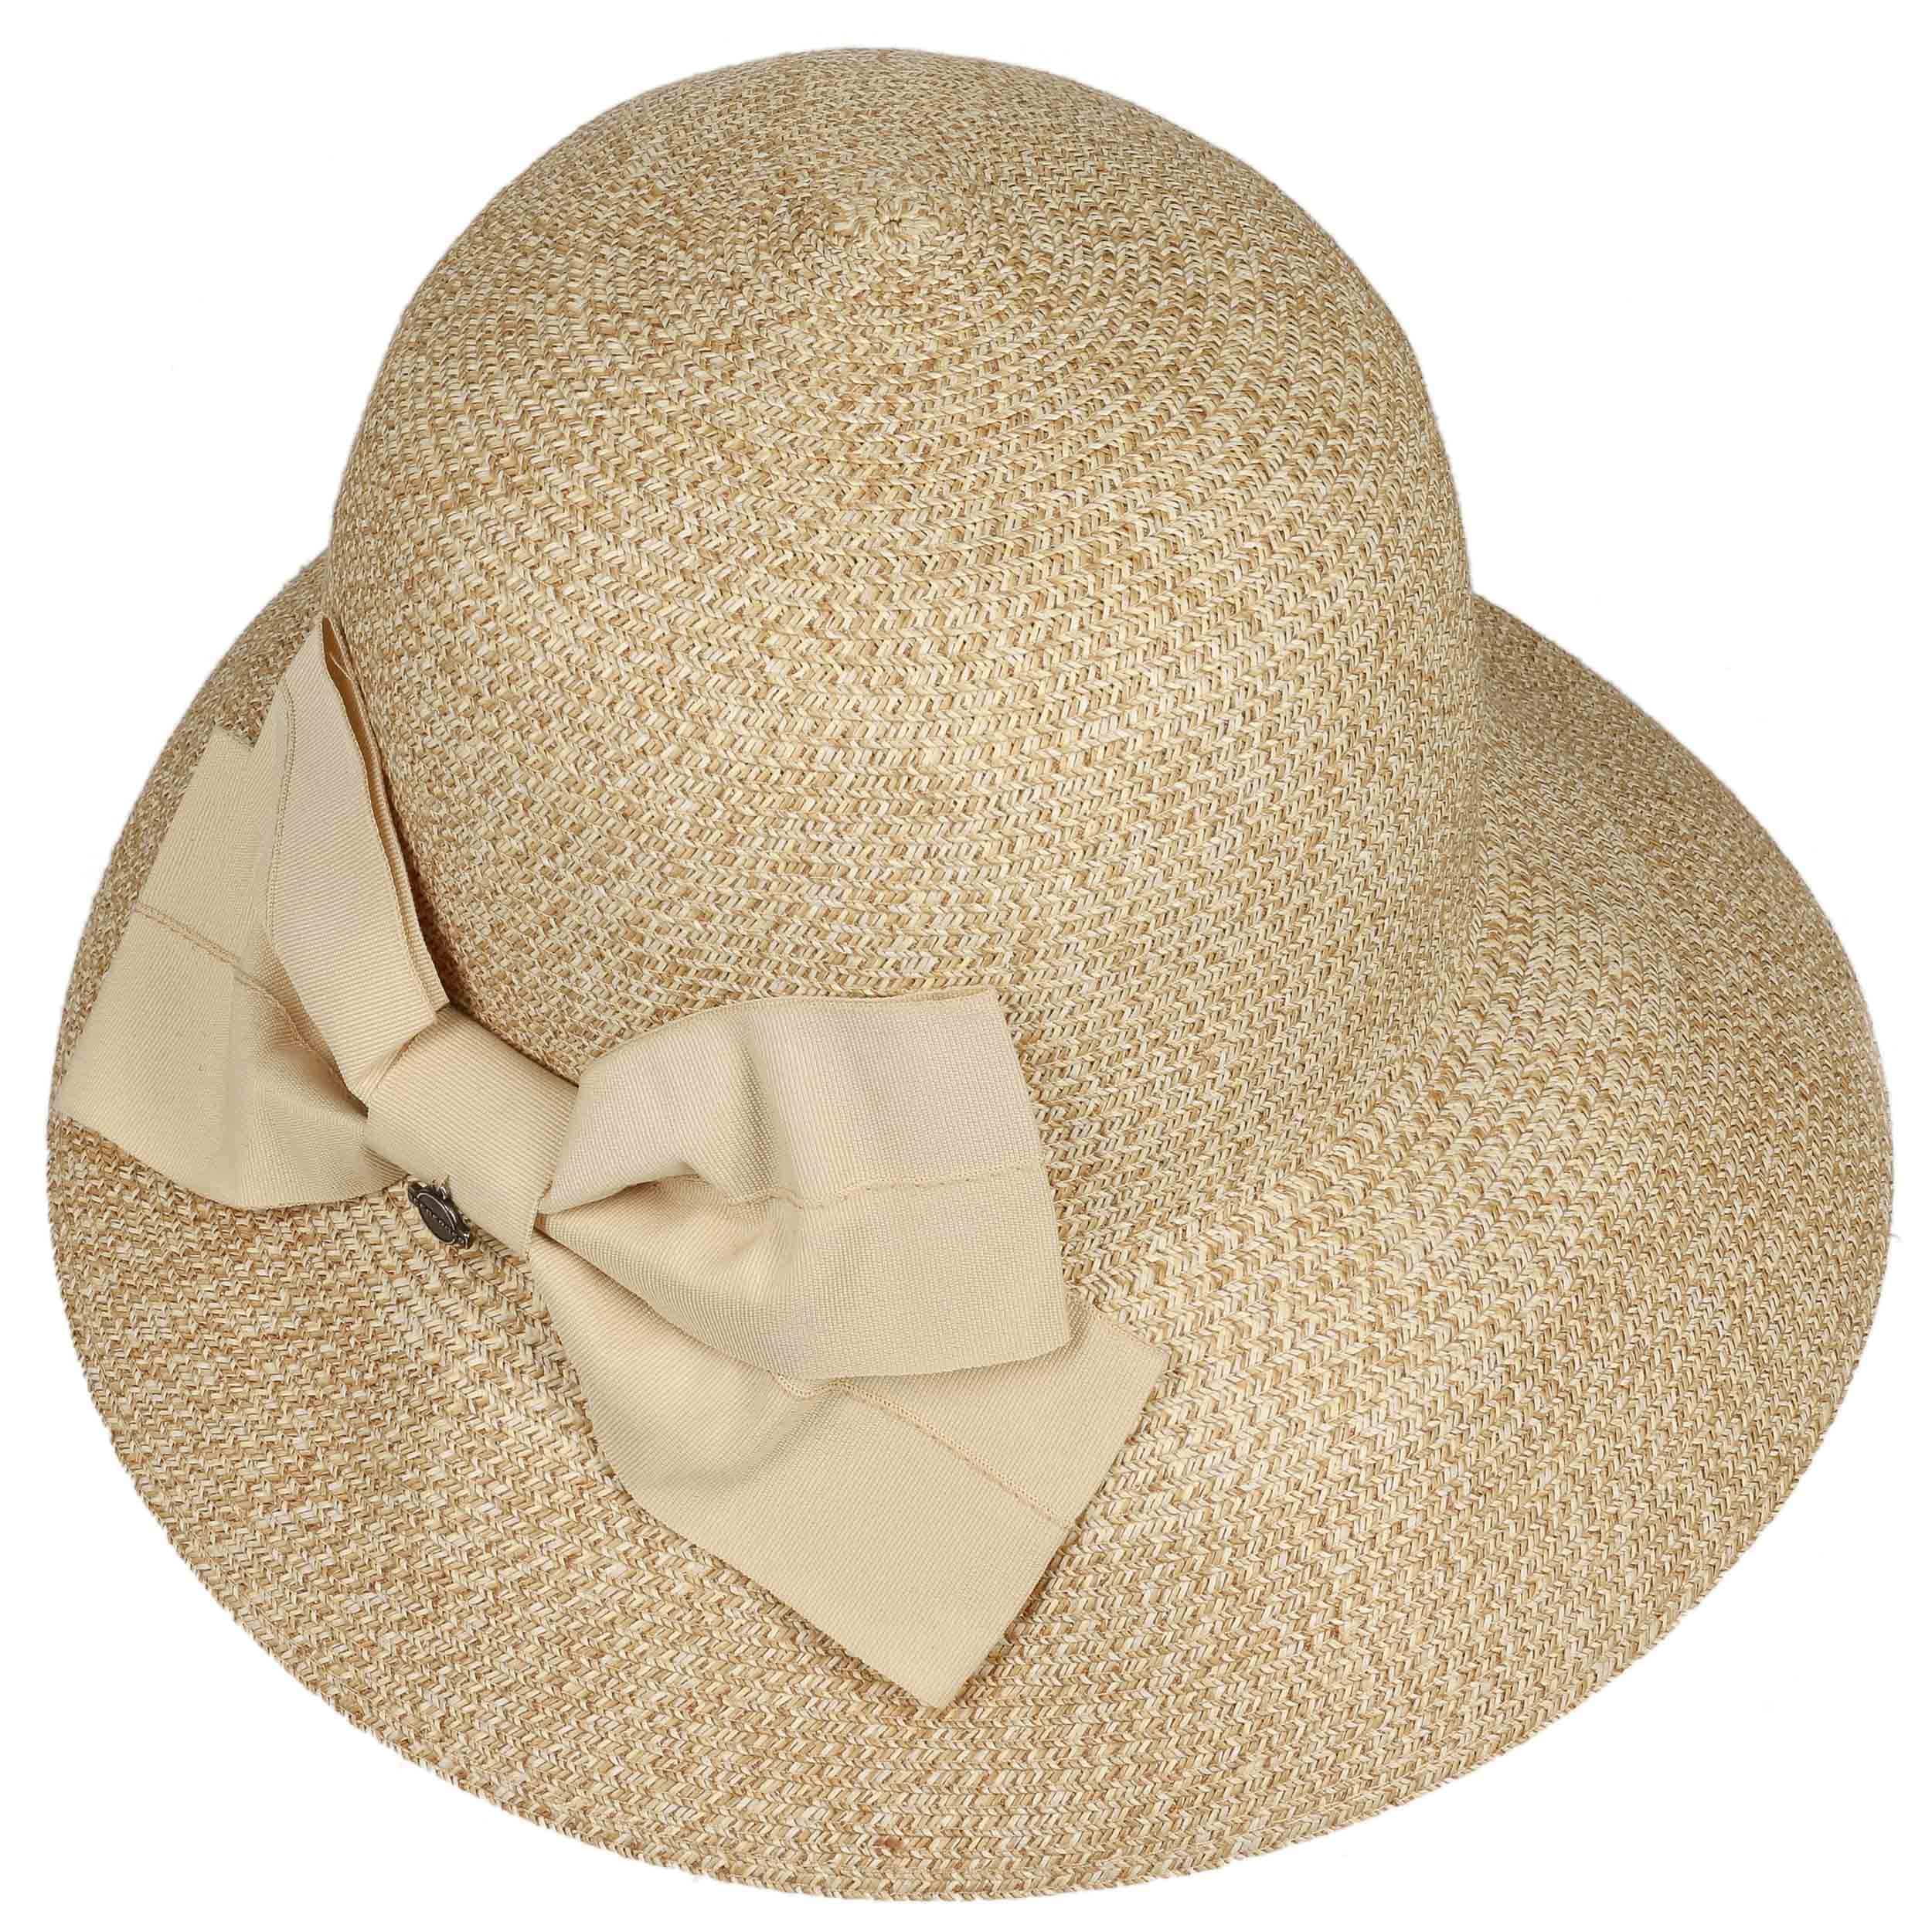 Mélange Cloche Hat by Seeberger - 33,95